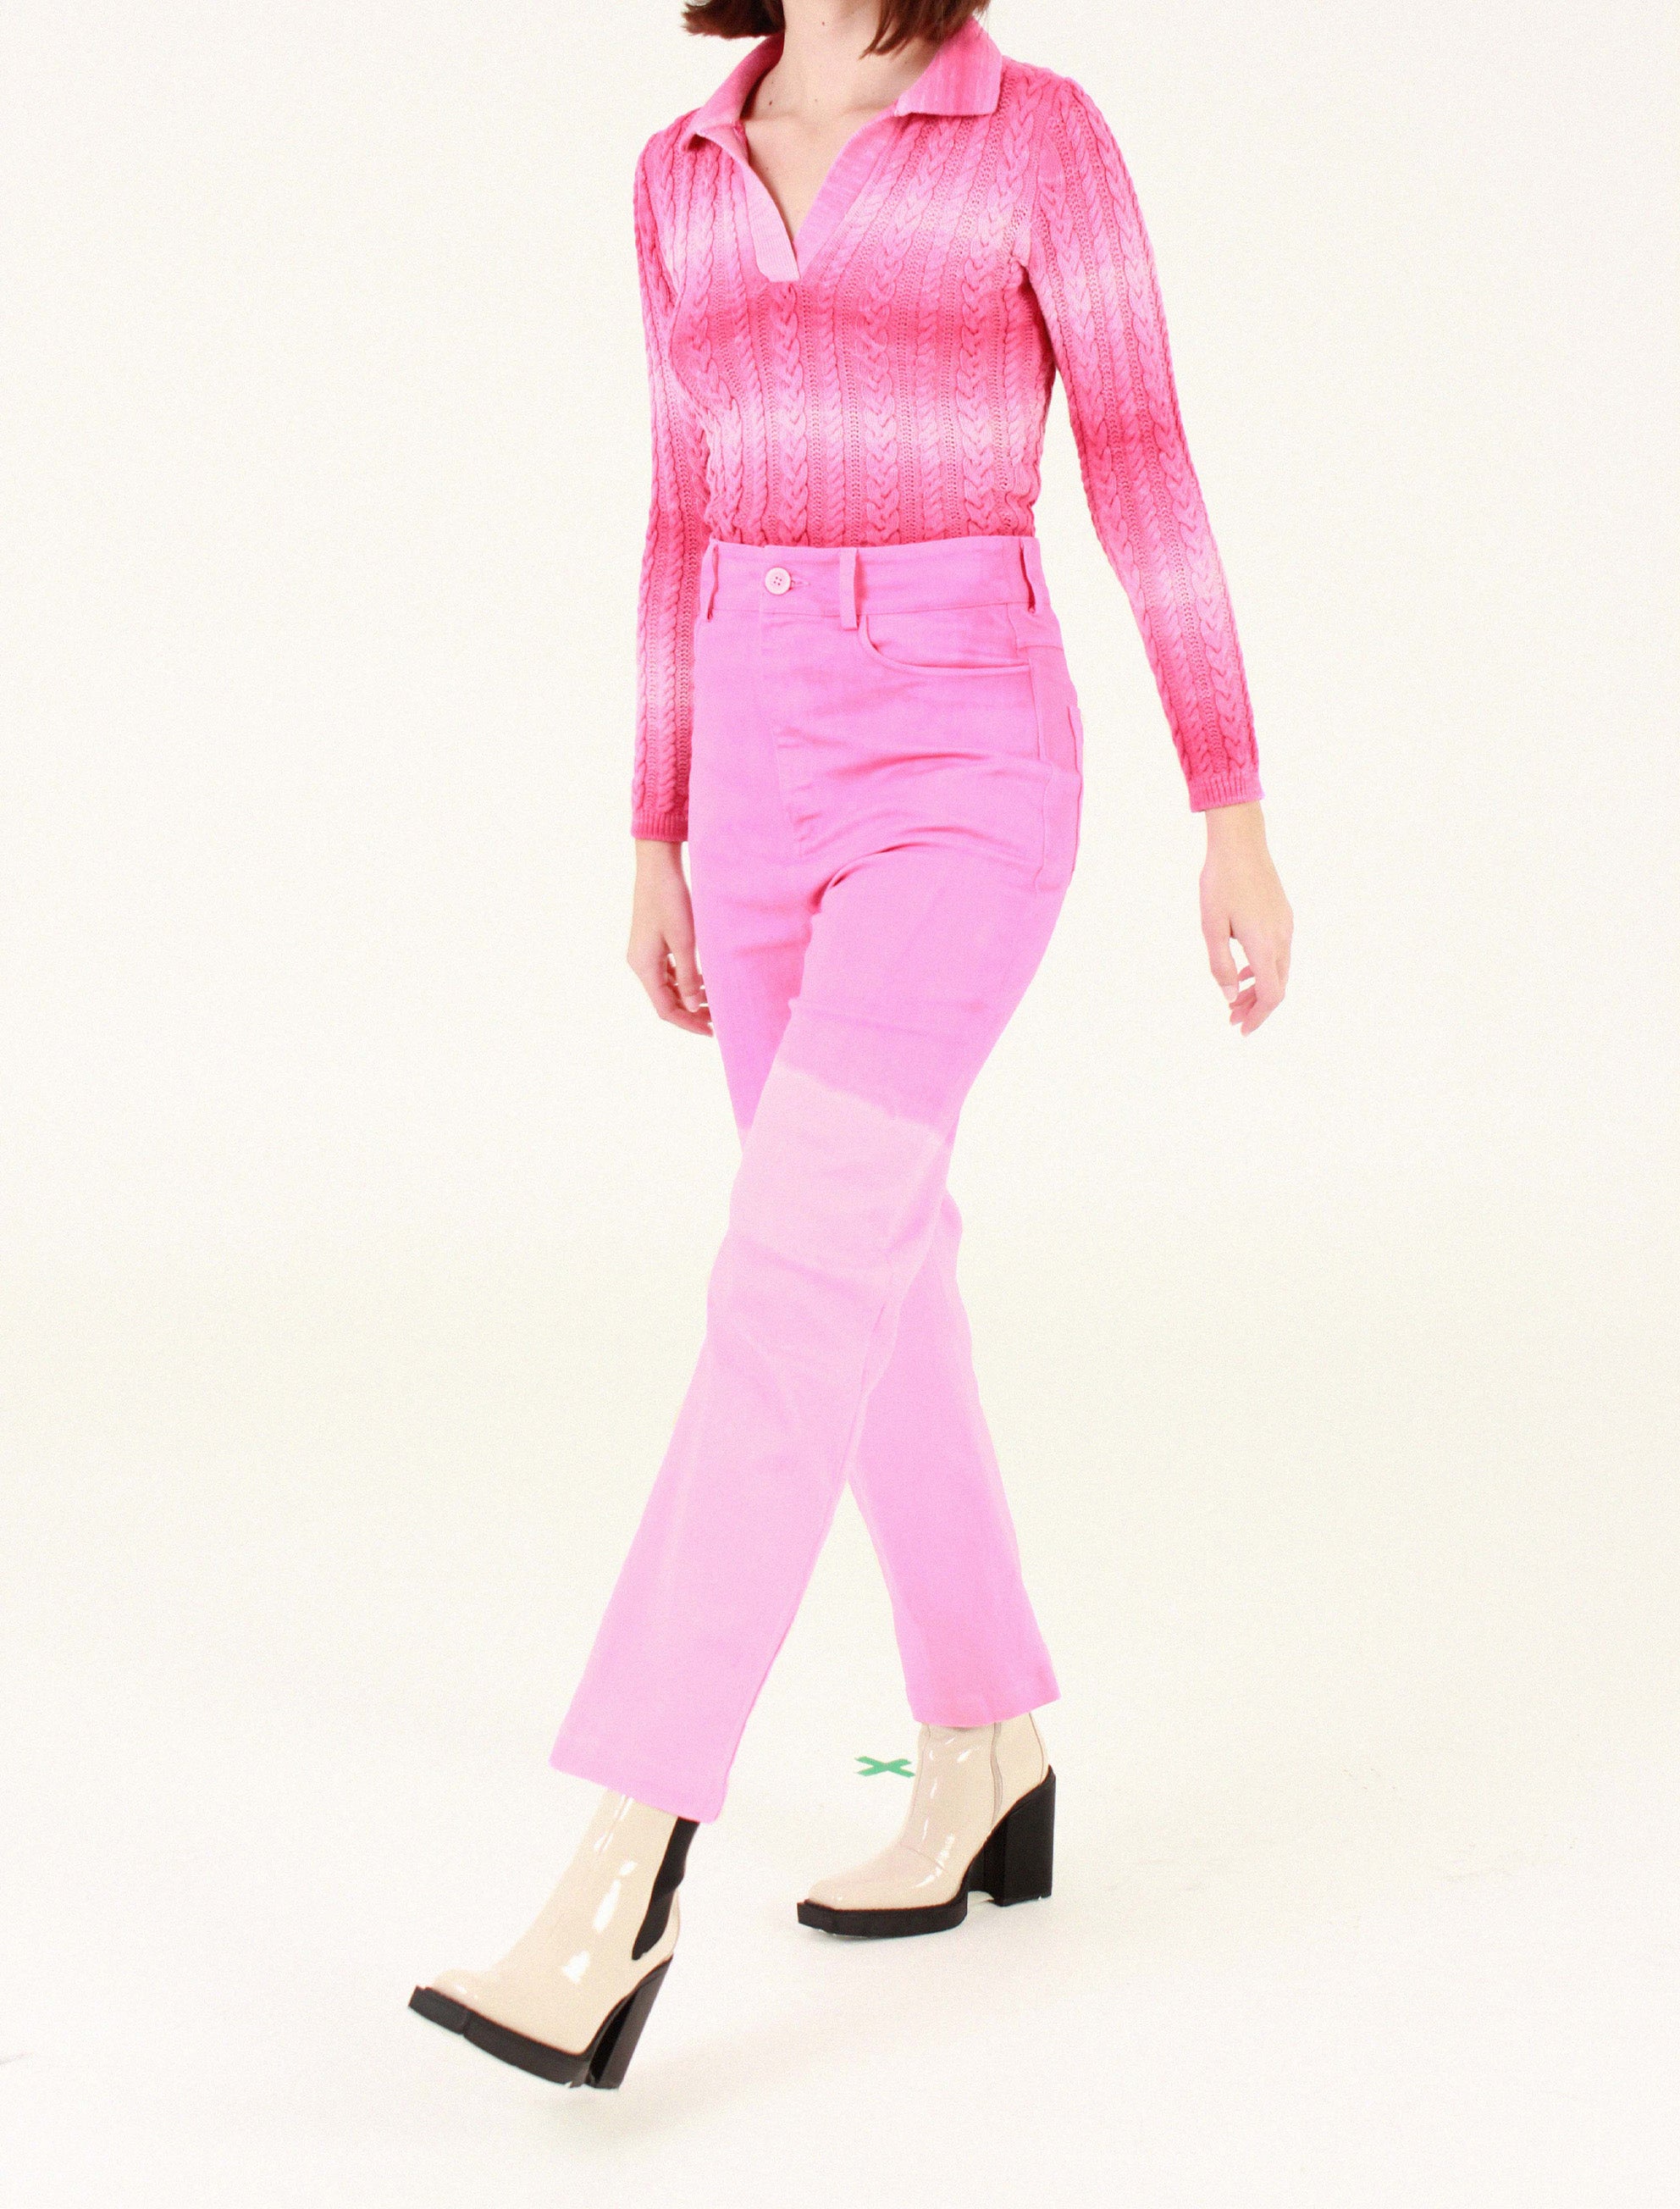 DANIELA pants dip dye pink – STUDIO FANTASTIQUE - sustainable clothing